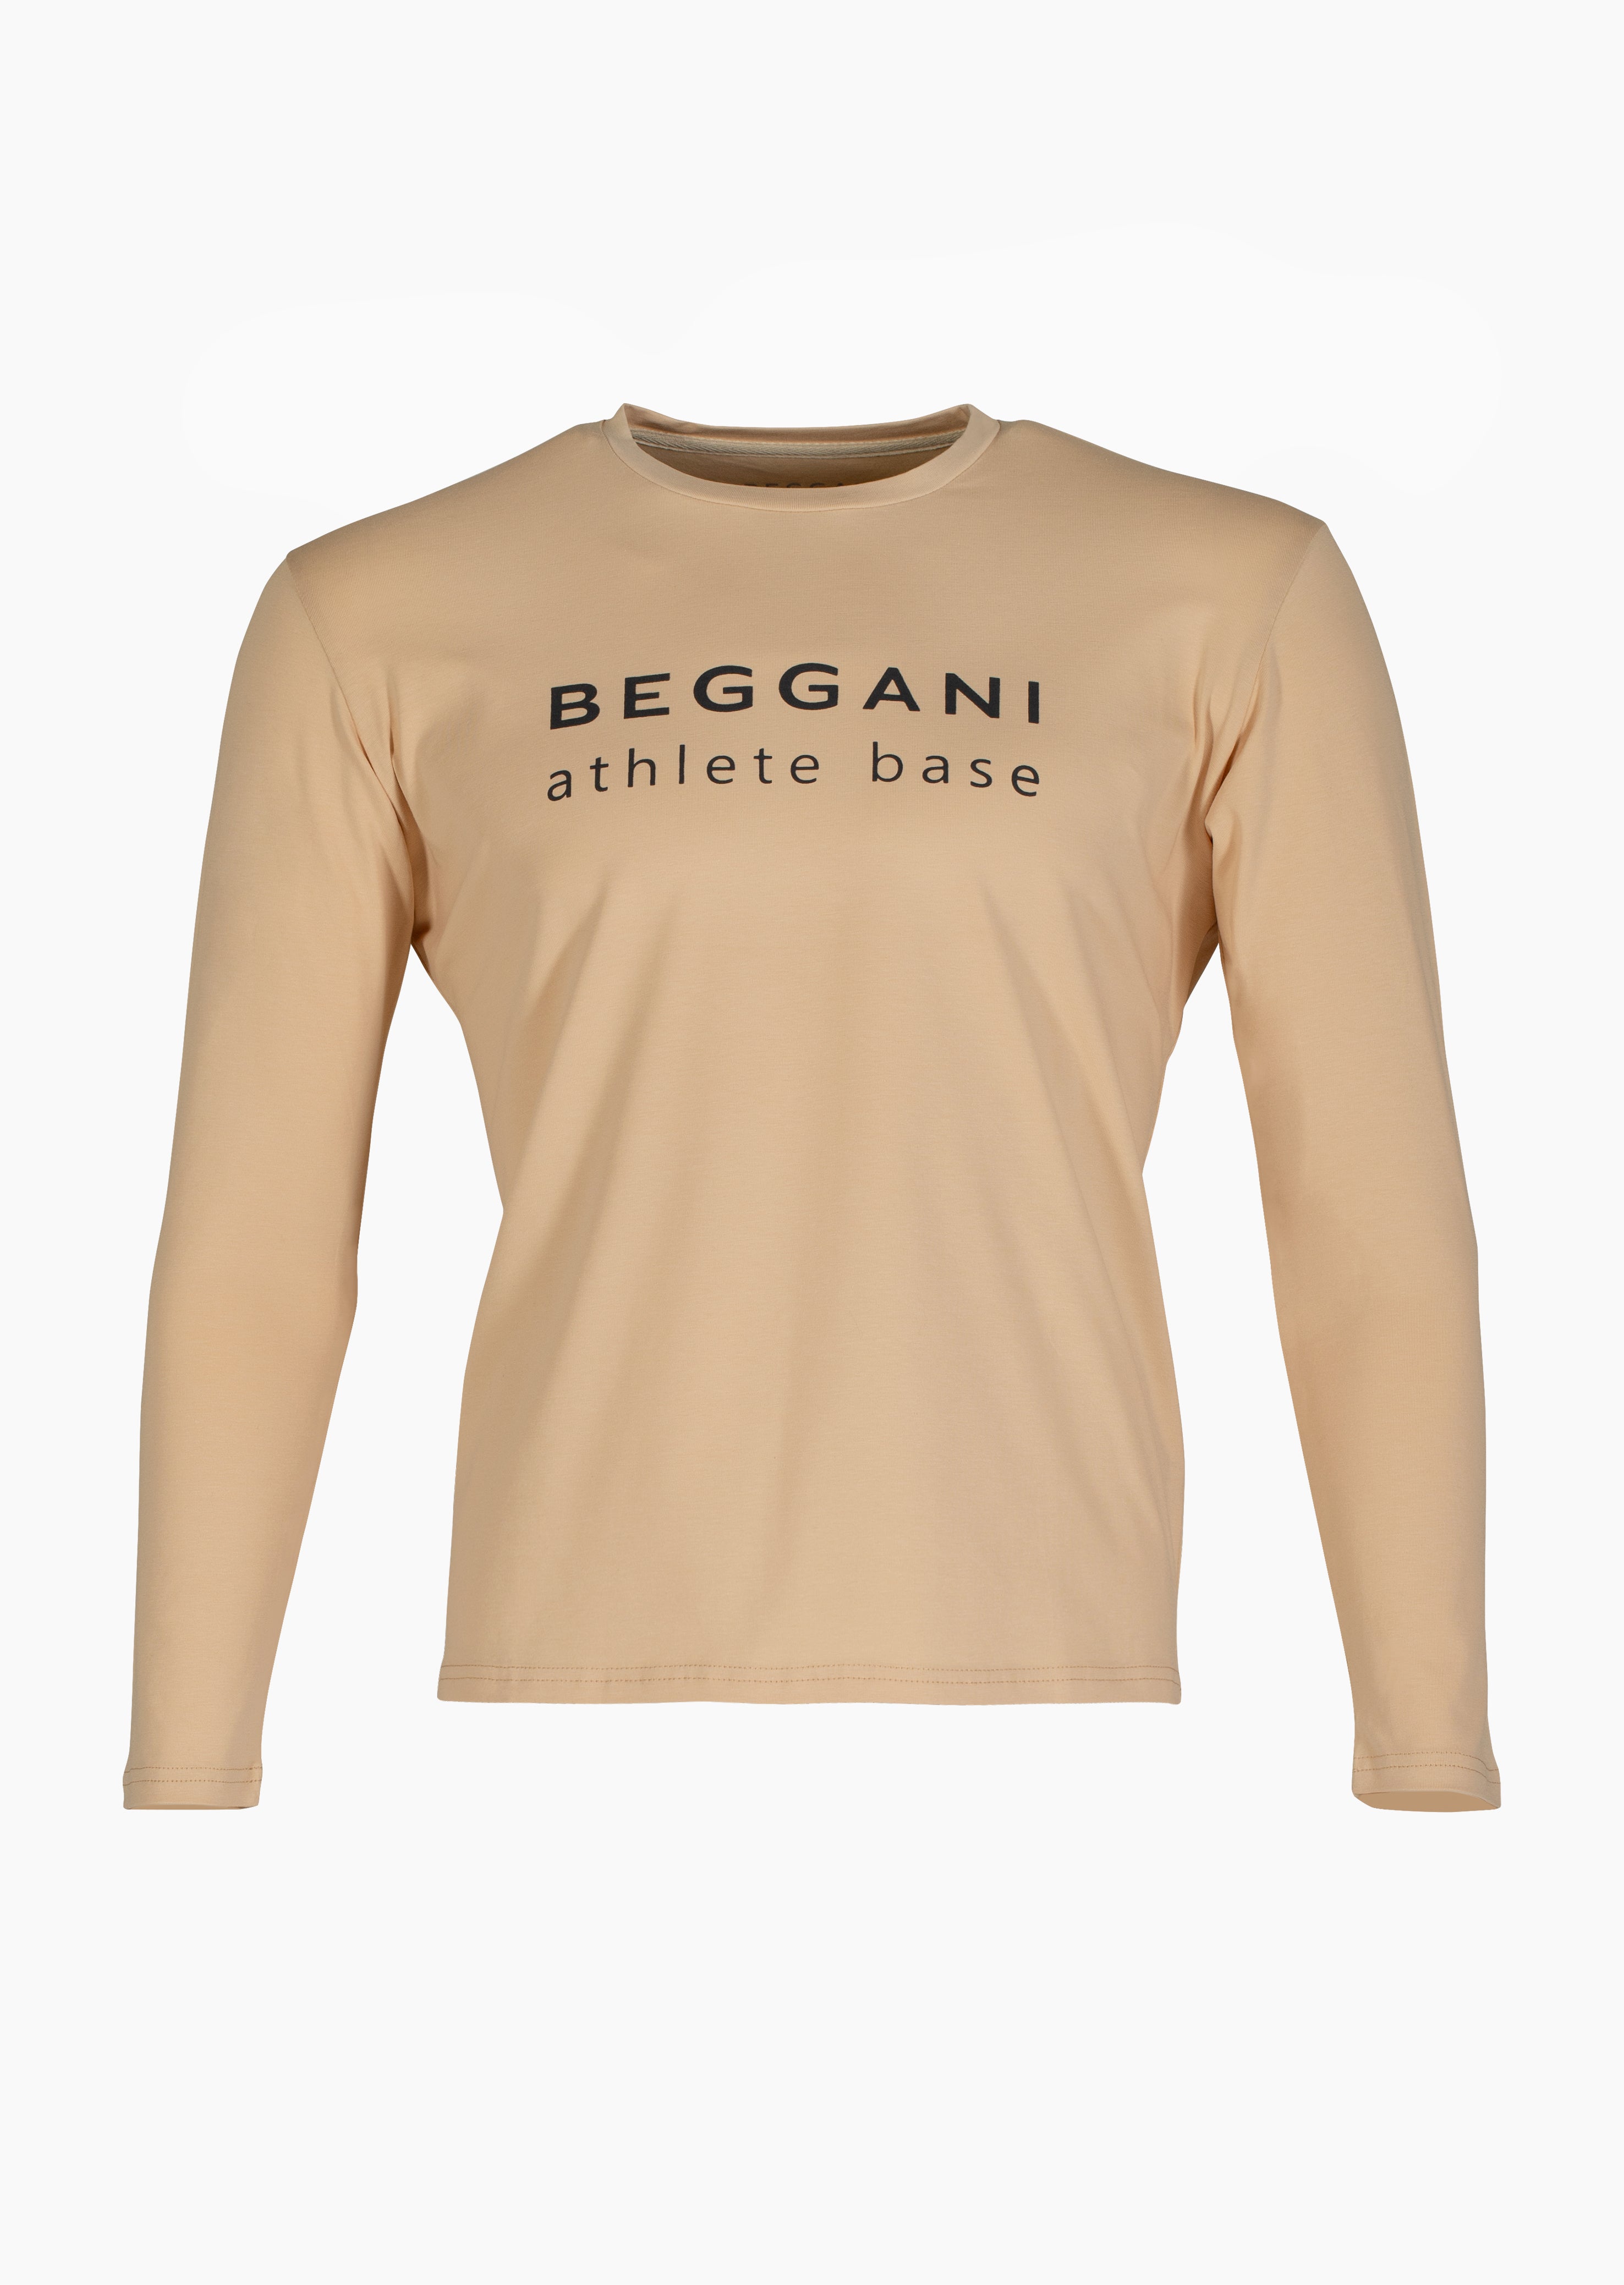 Long-sleeved T-shirt BEGGANI athlete base